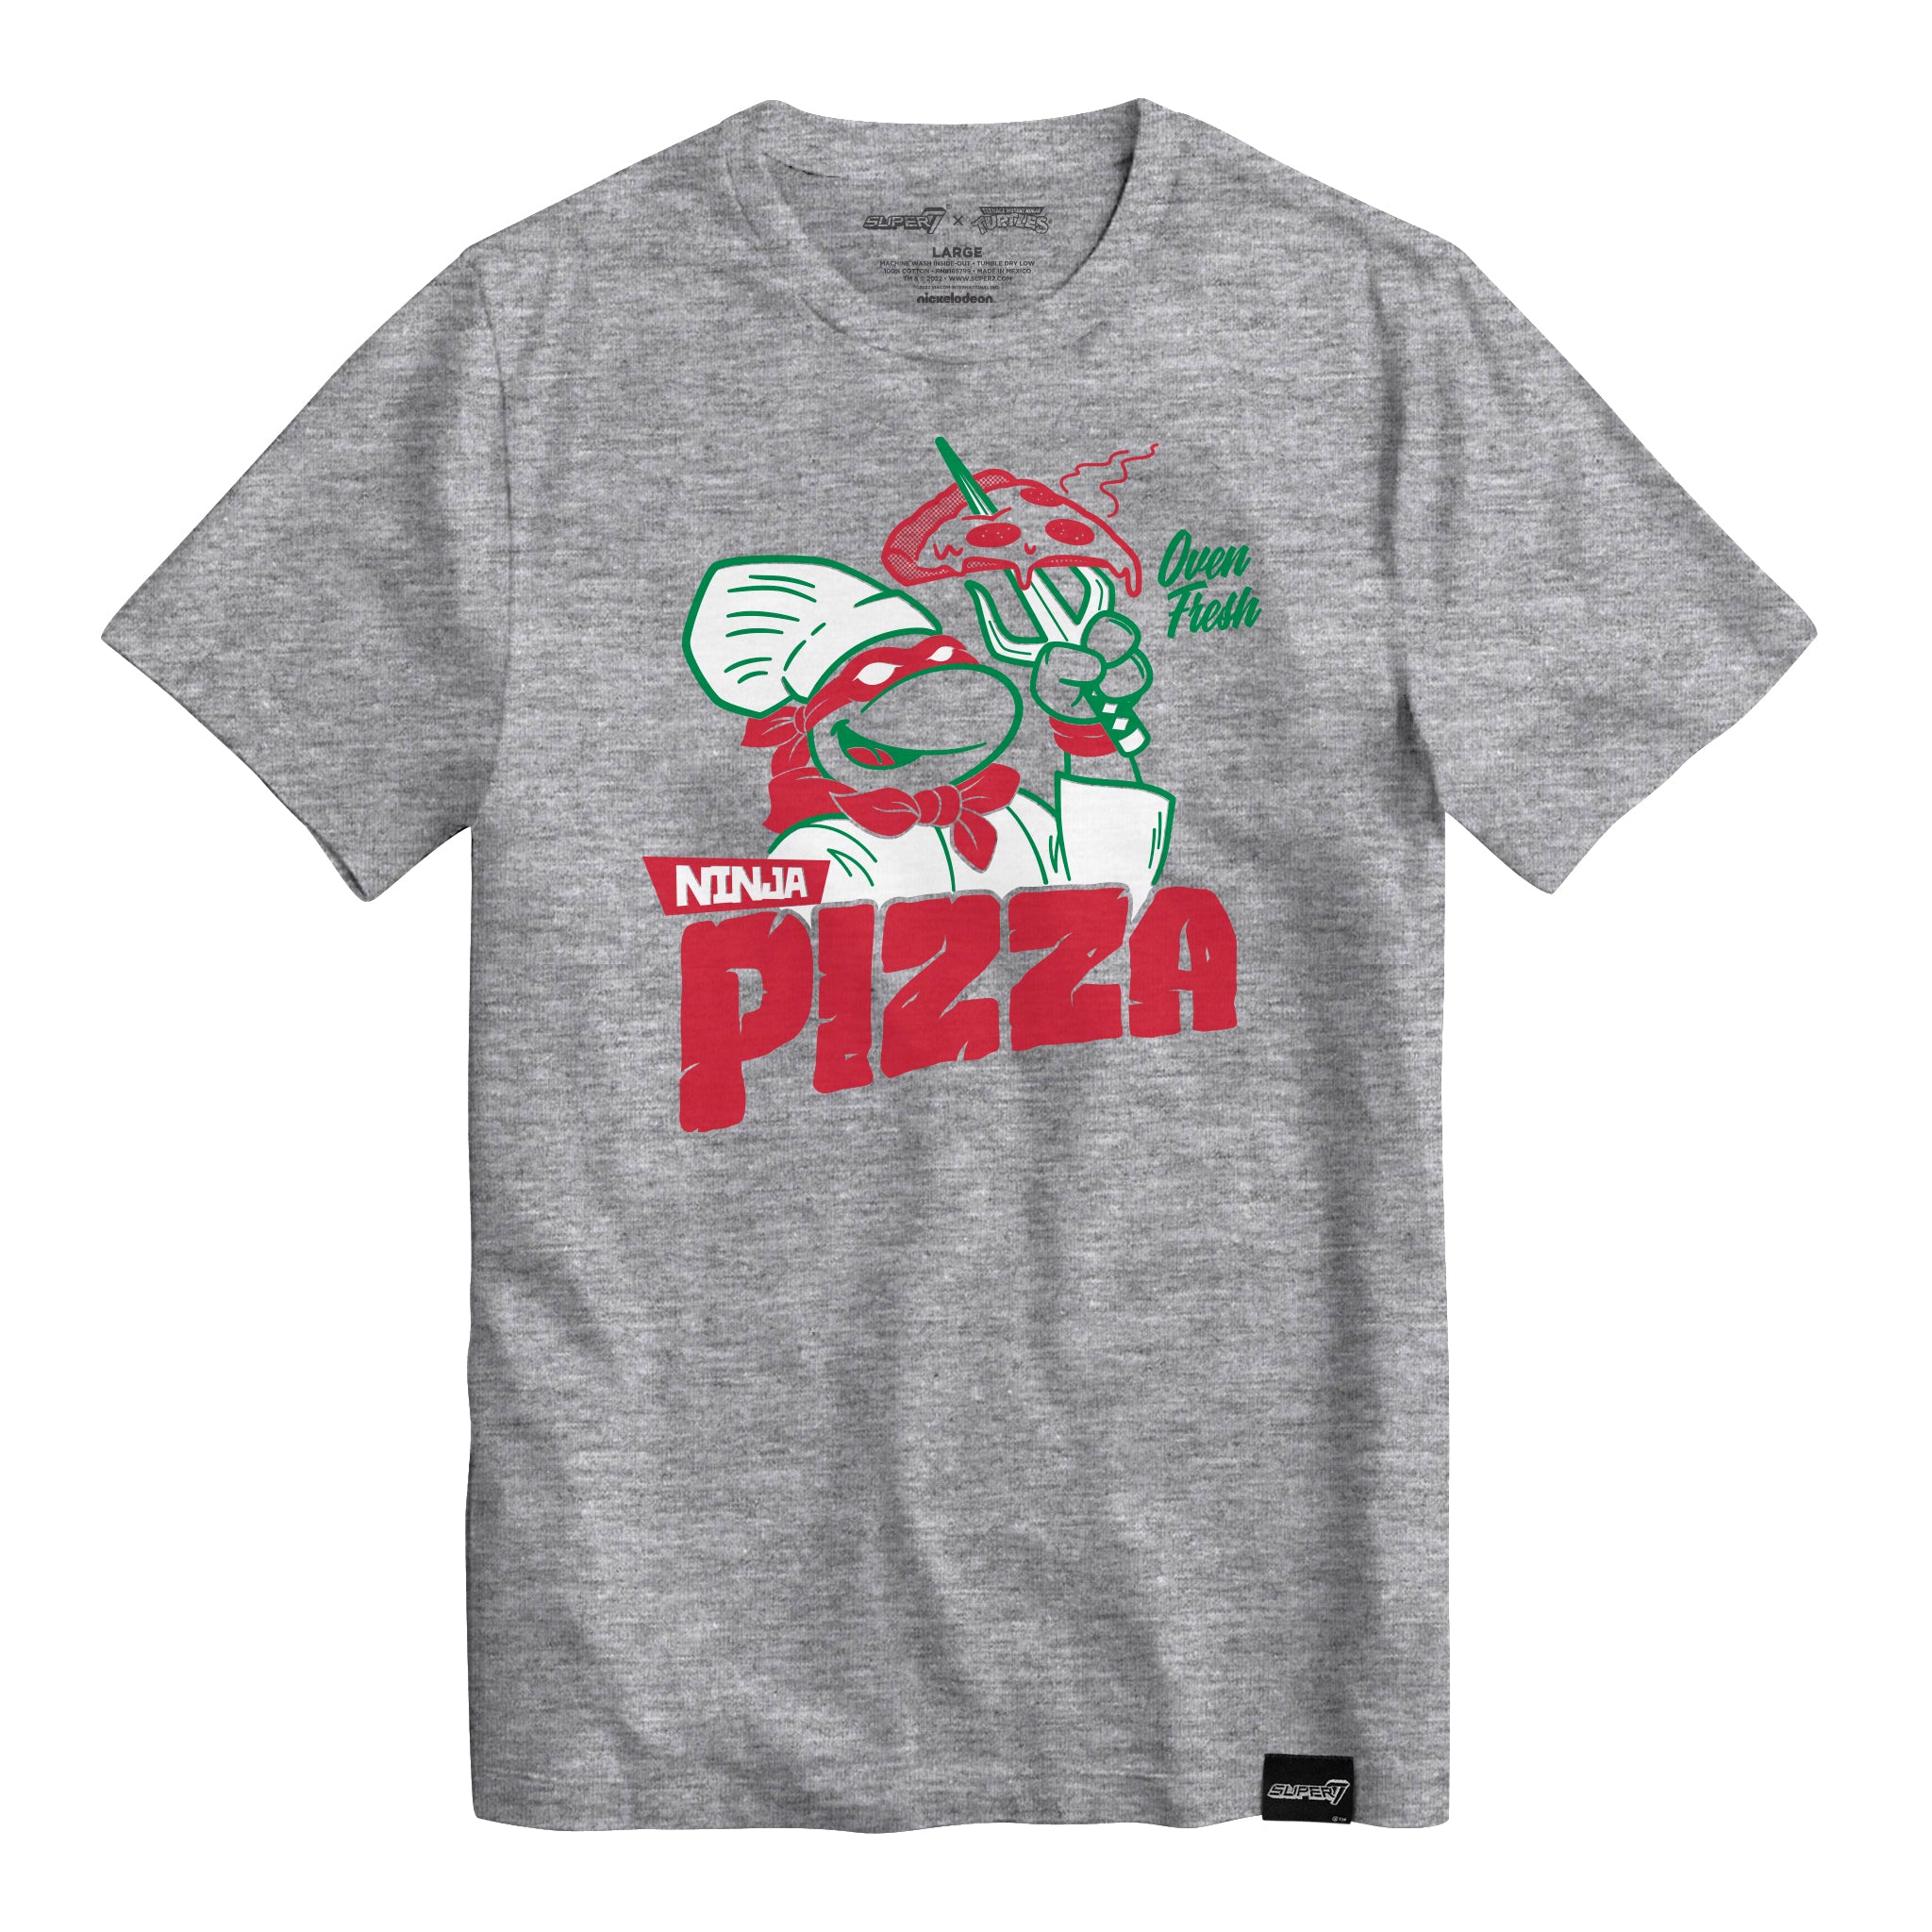 Teenage Mutant Ninja Turtles T-Shirt - Pizza Shop